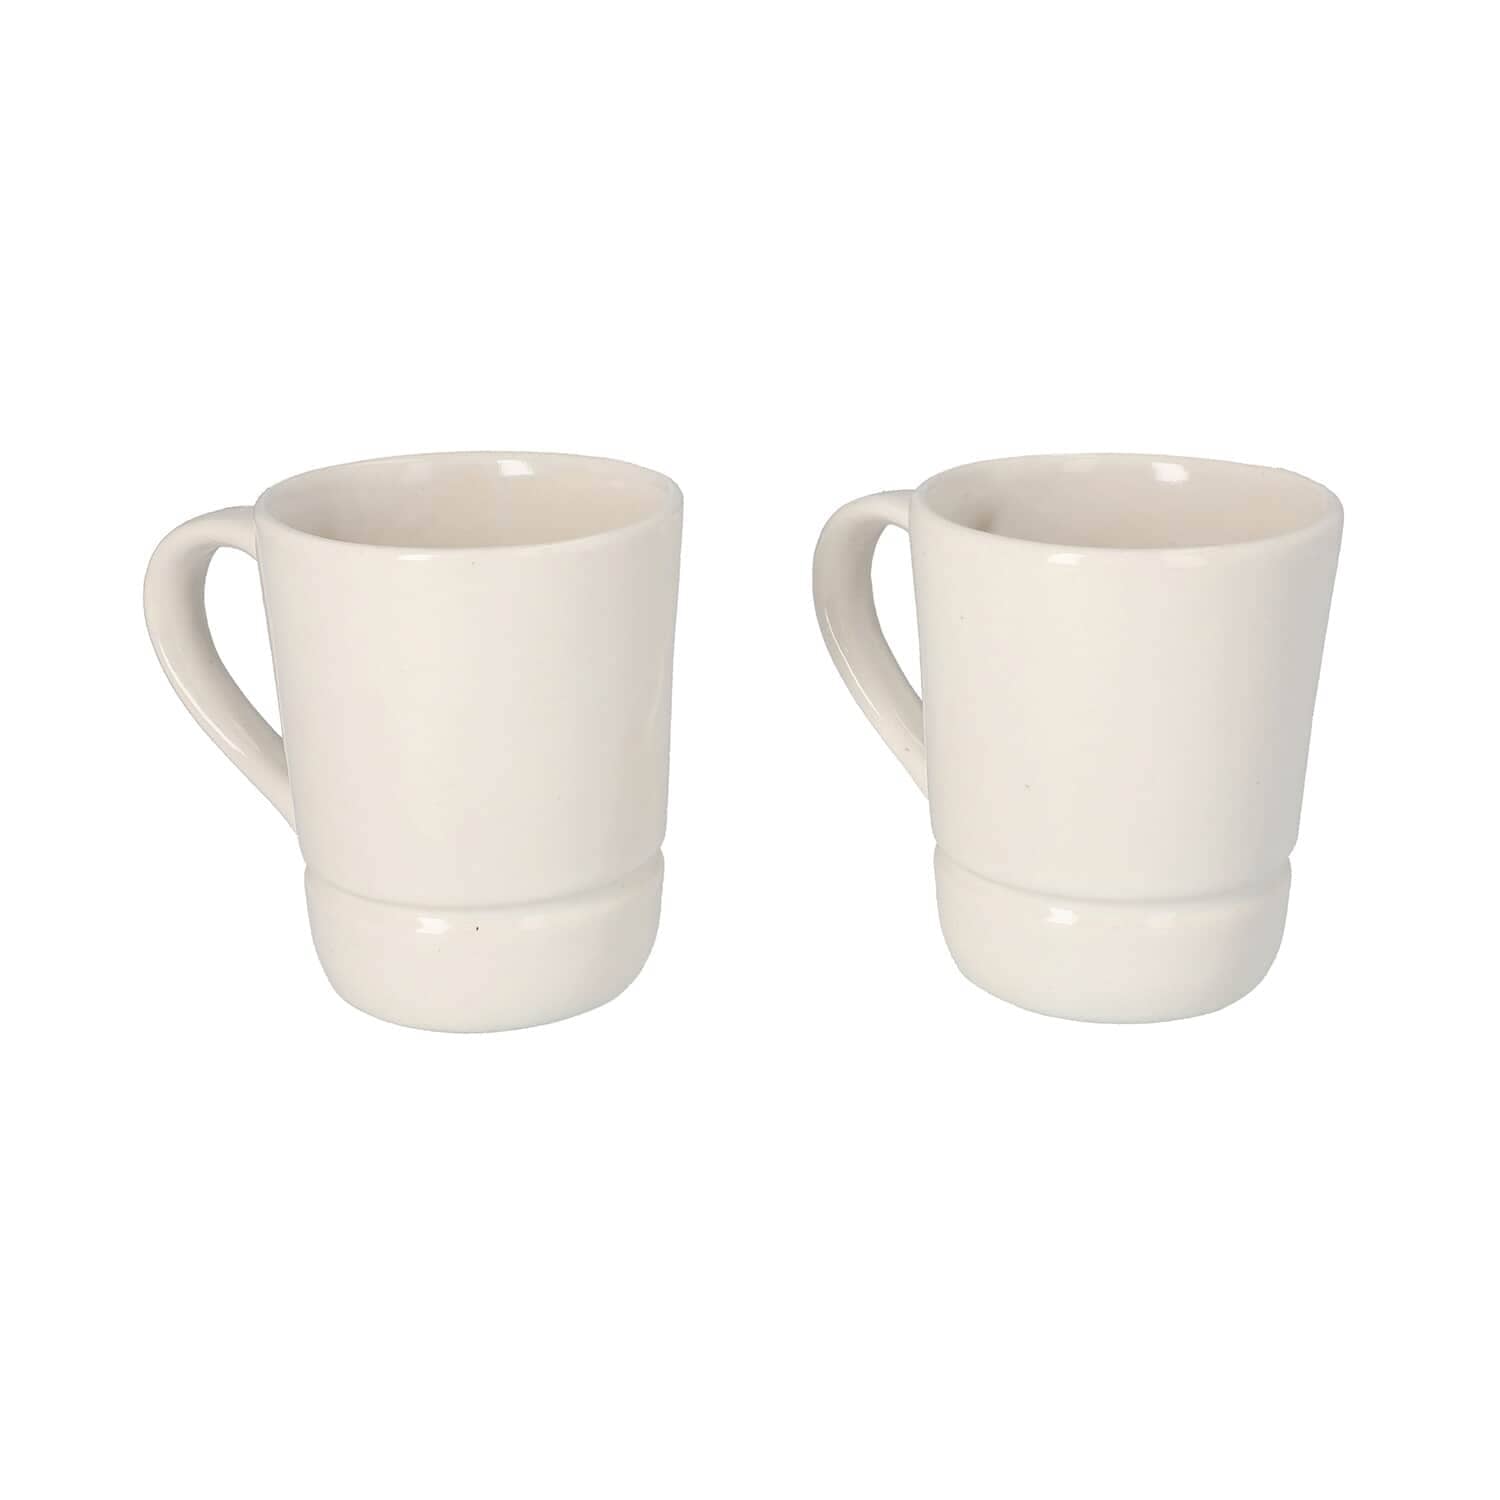 Set of 2 White Ceramic Drip Catching Mug Durable Beverage Serving Cup